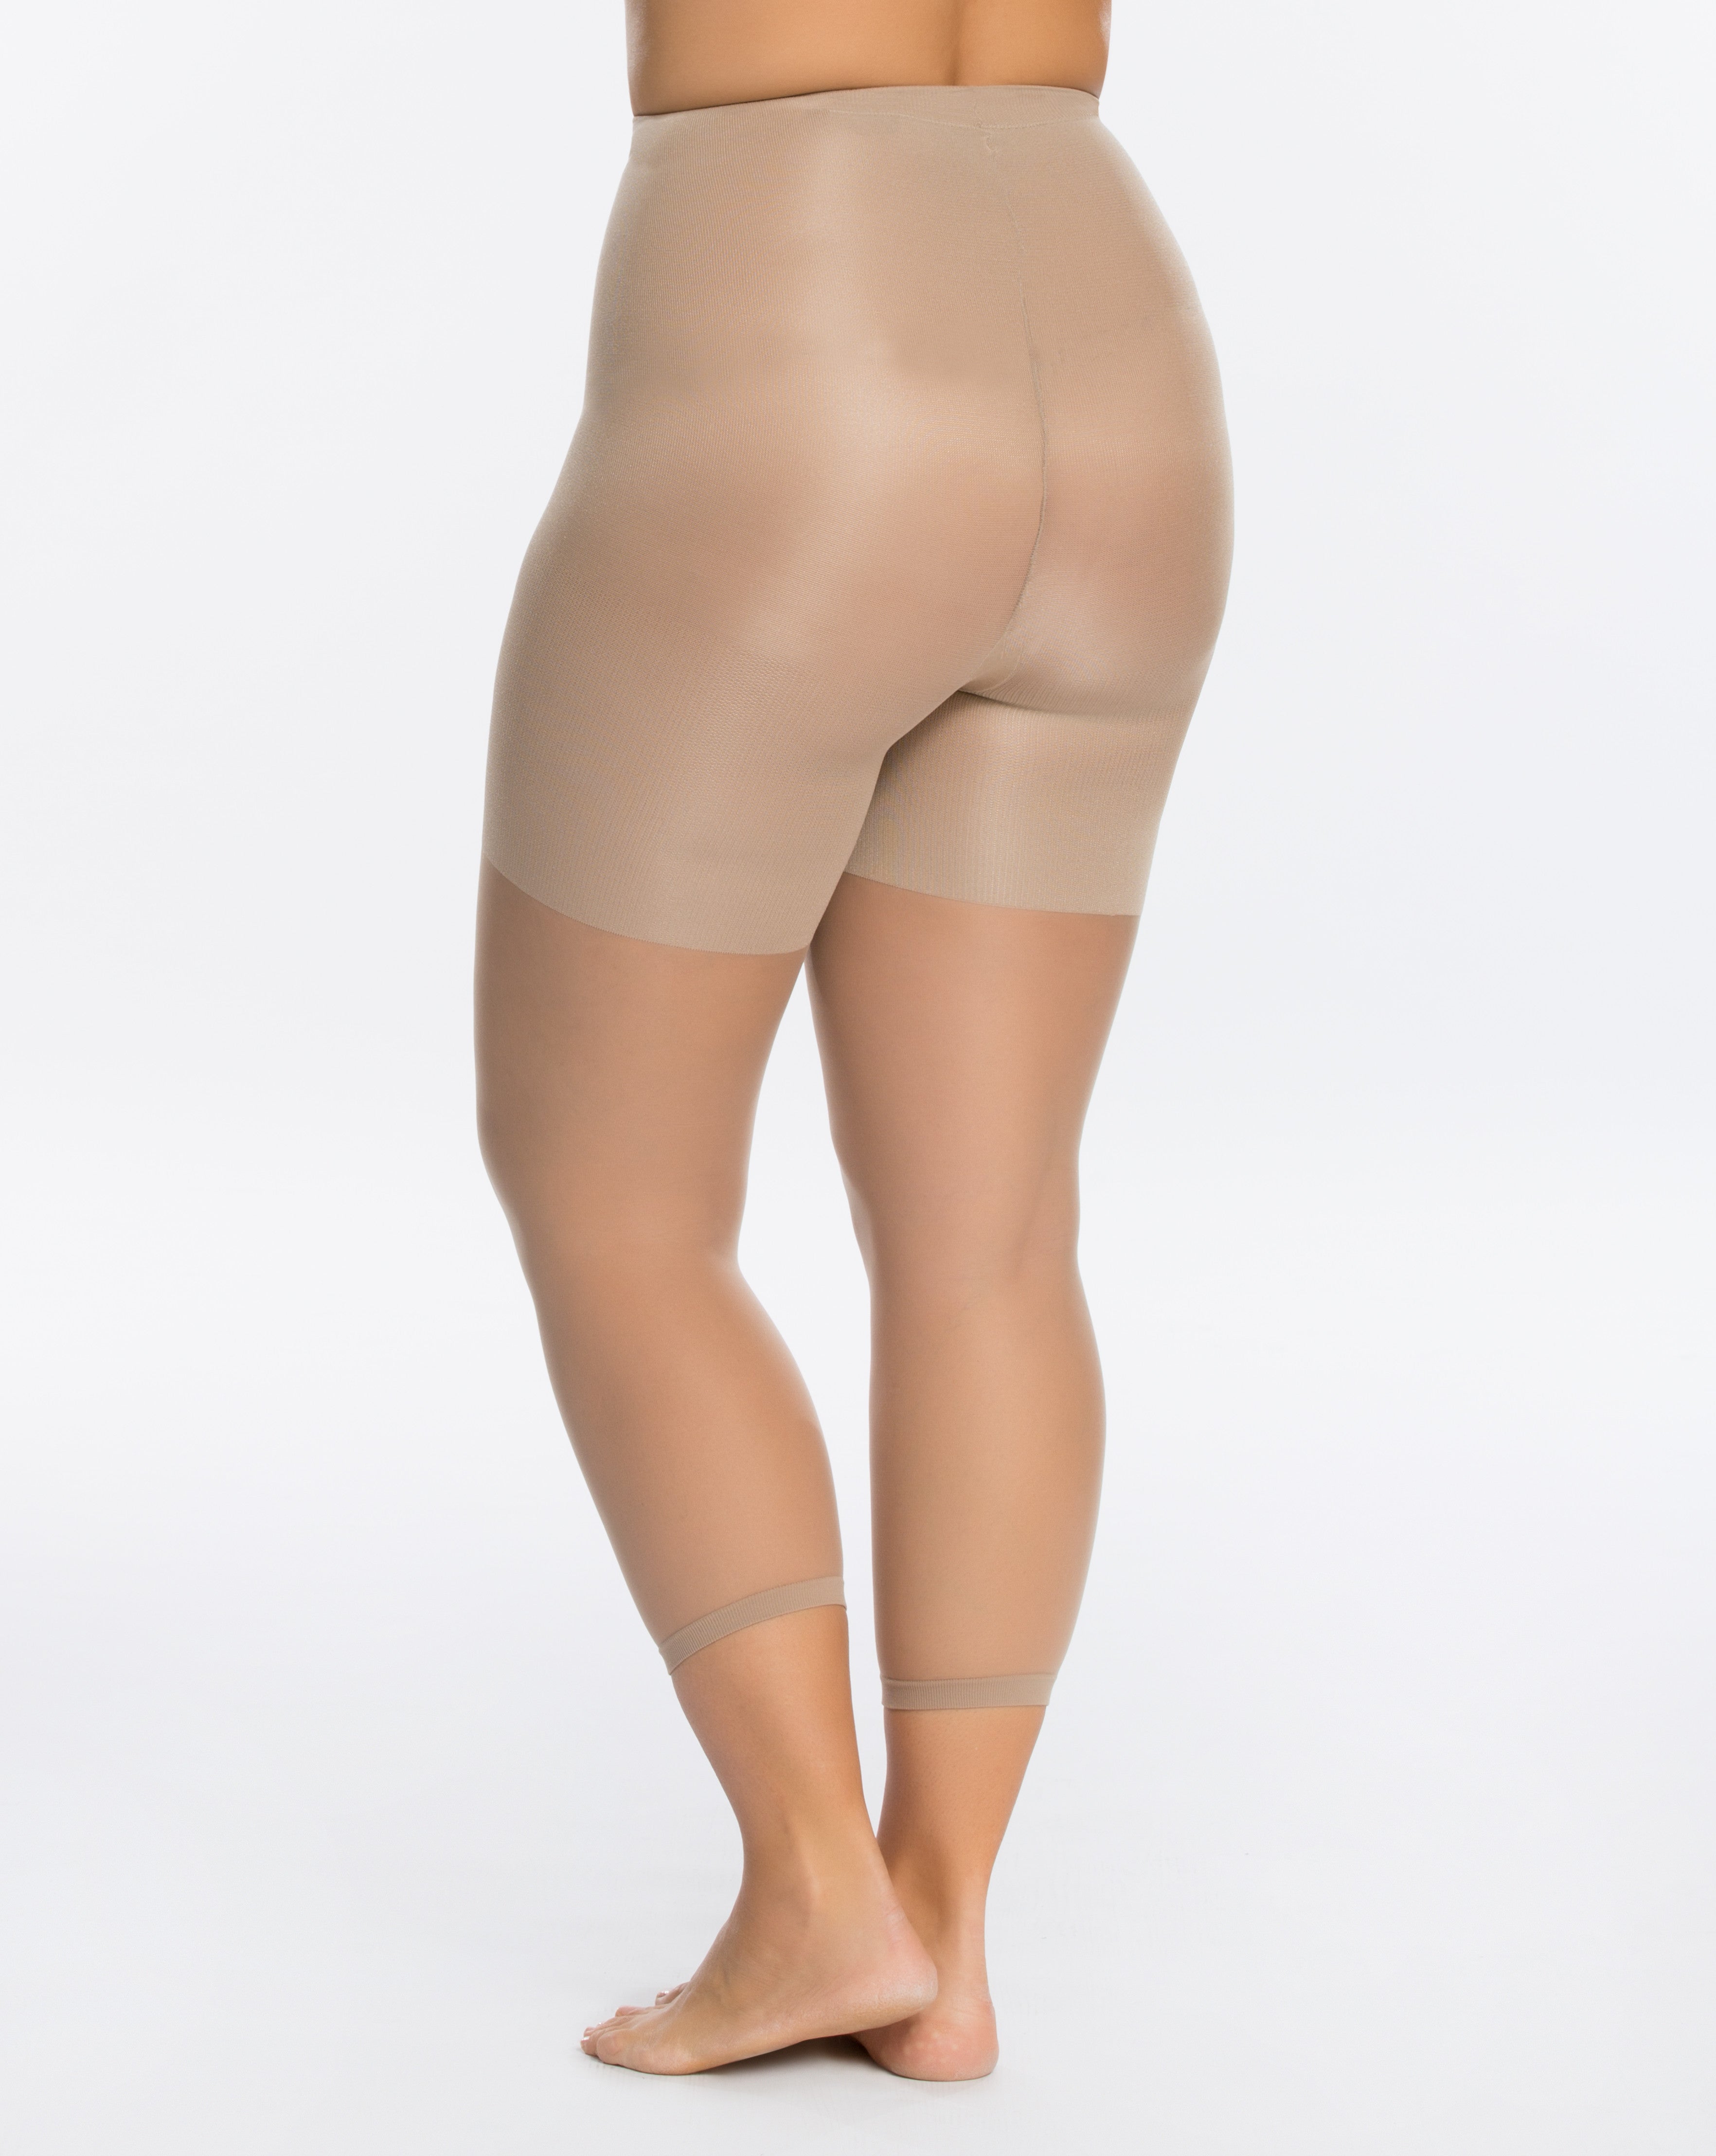 New. Spanx Sara Blakely High-Falutin' High Waisted Footless Pantyhose Nude  B D13